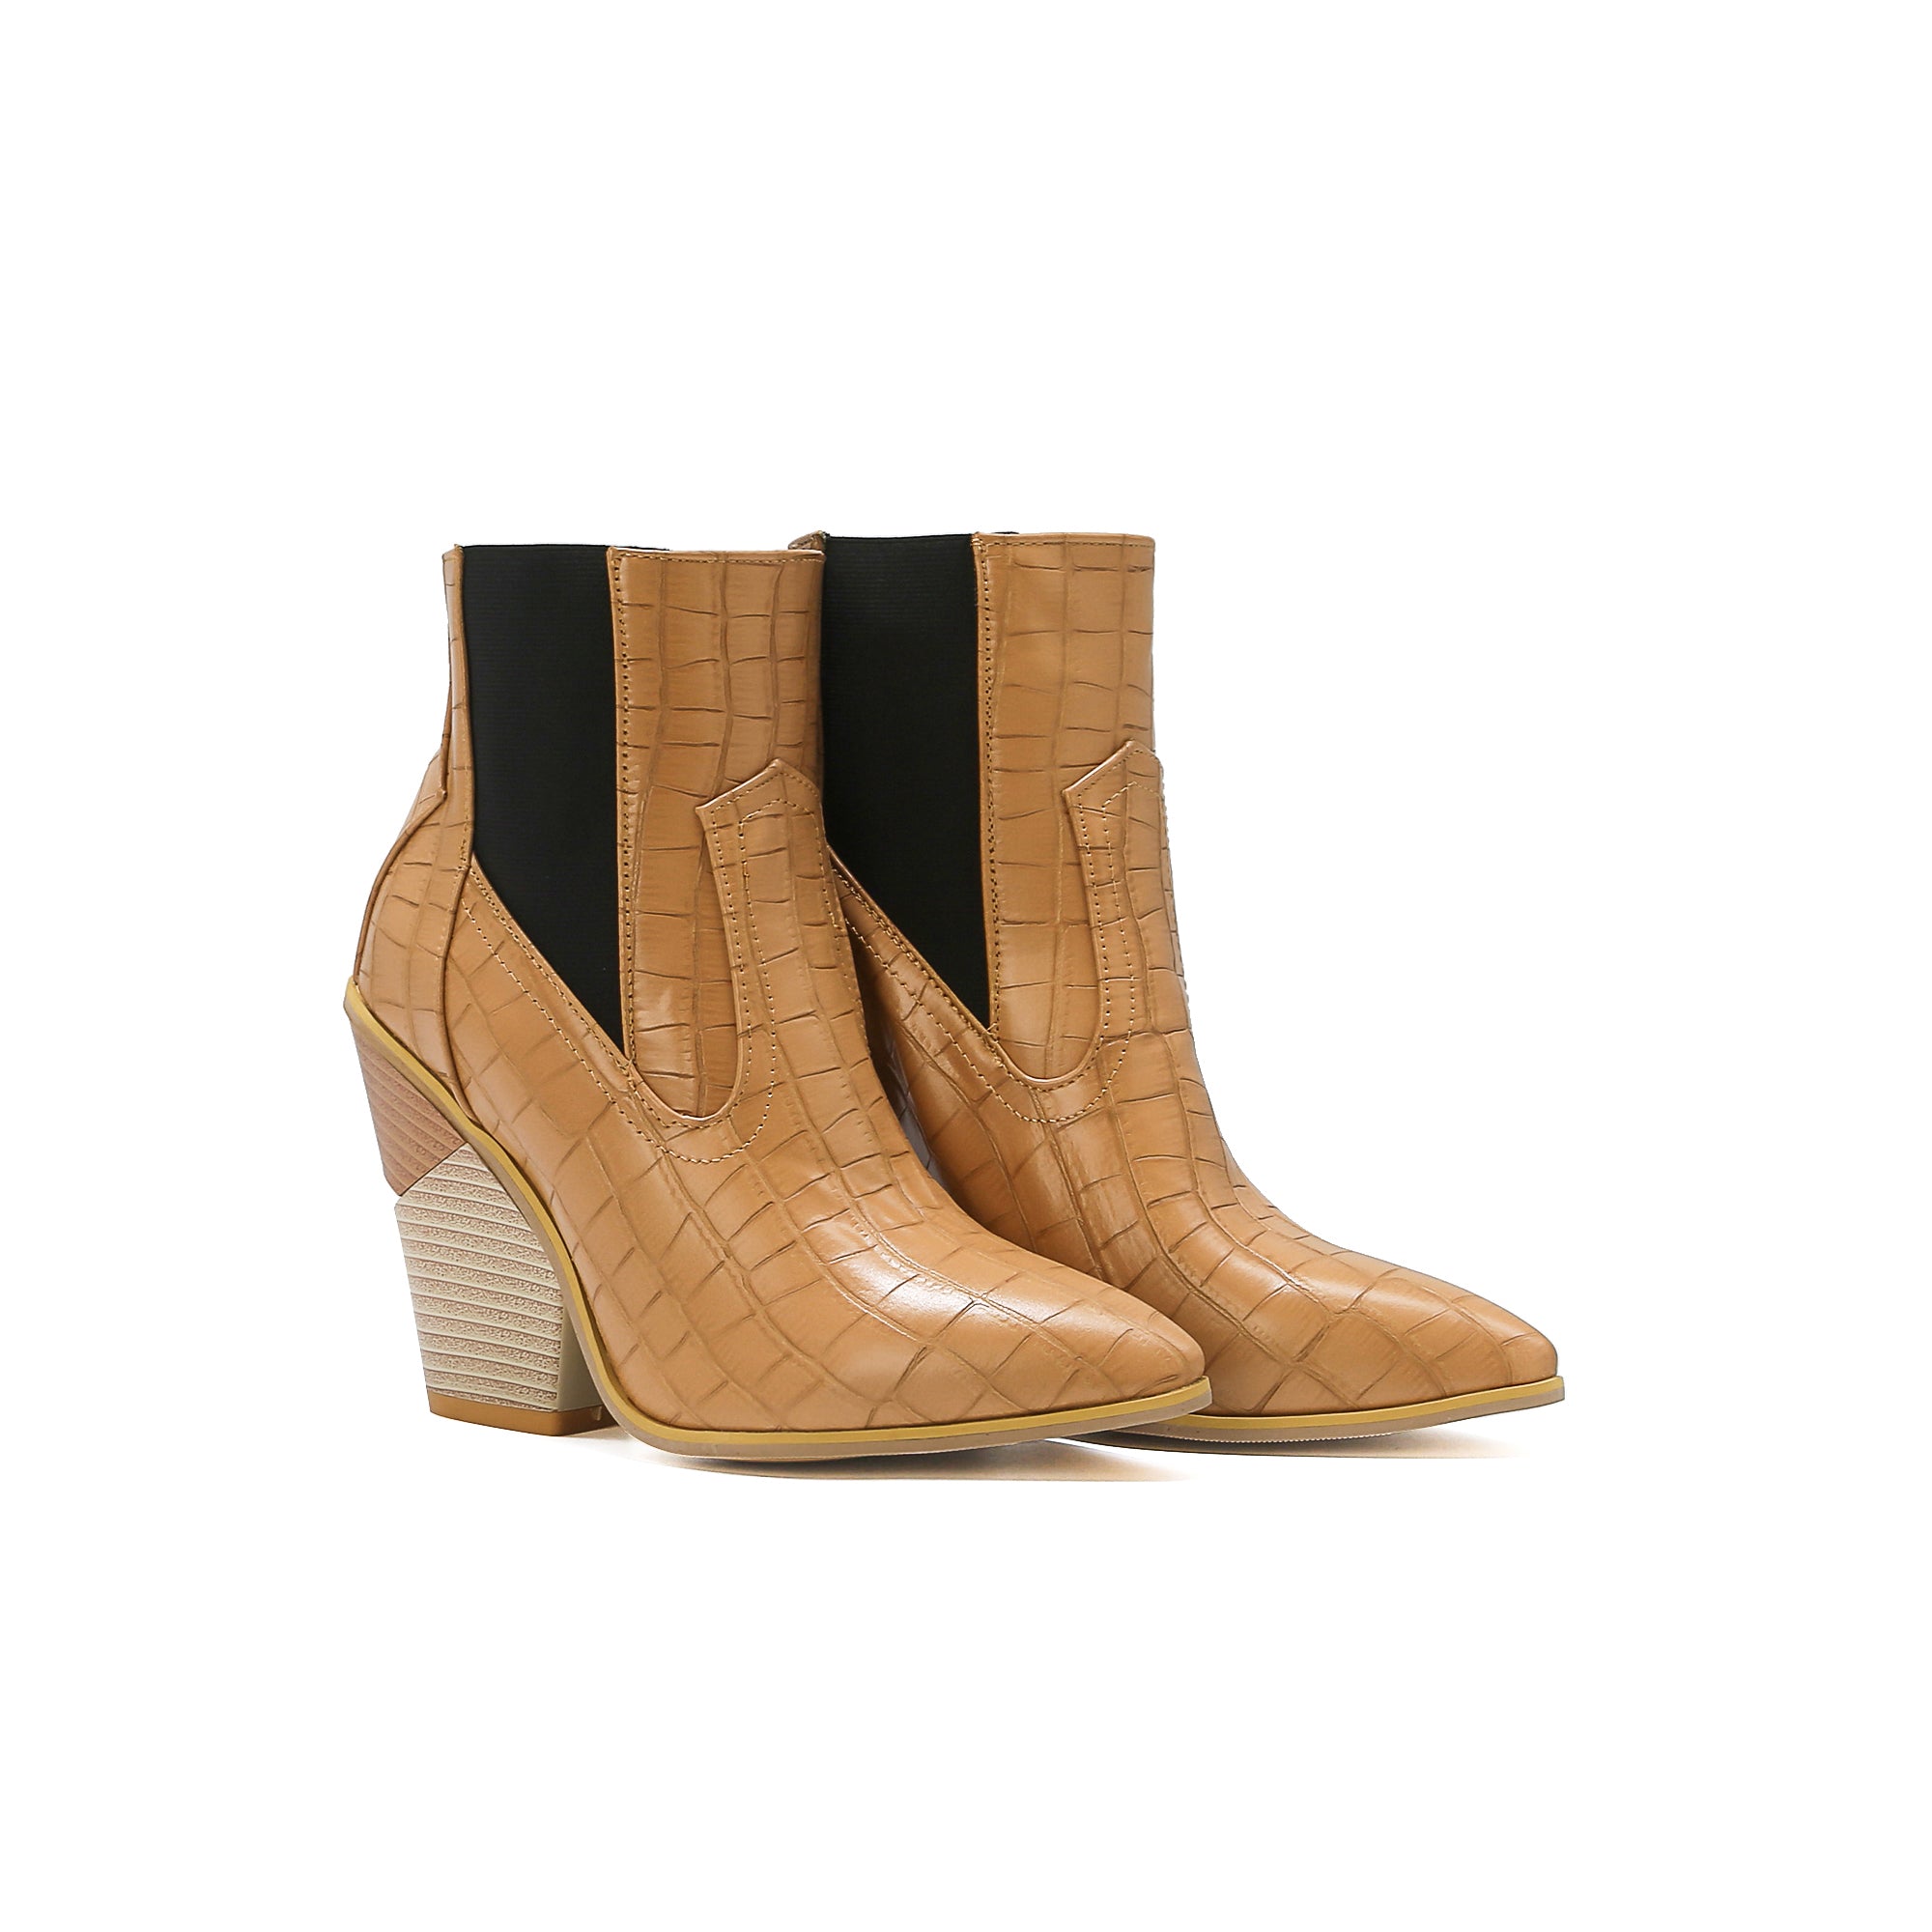 Bigsizeheels Slip-on Chelsea ankle boots - Yellow freeshipping - bigsizeheel®-size5-size15 -All Plus Sizes Available!